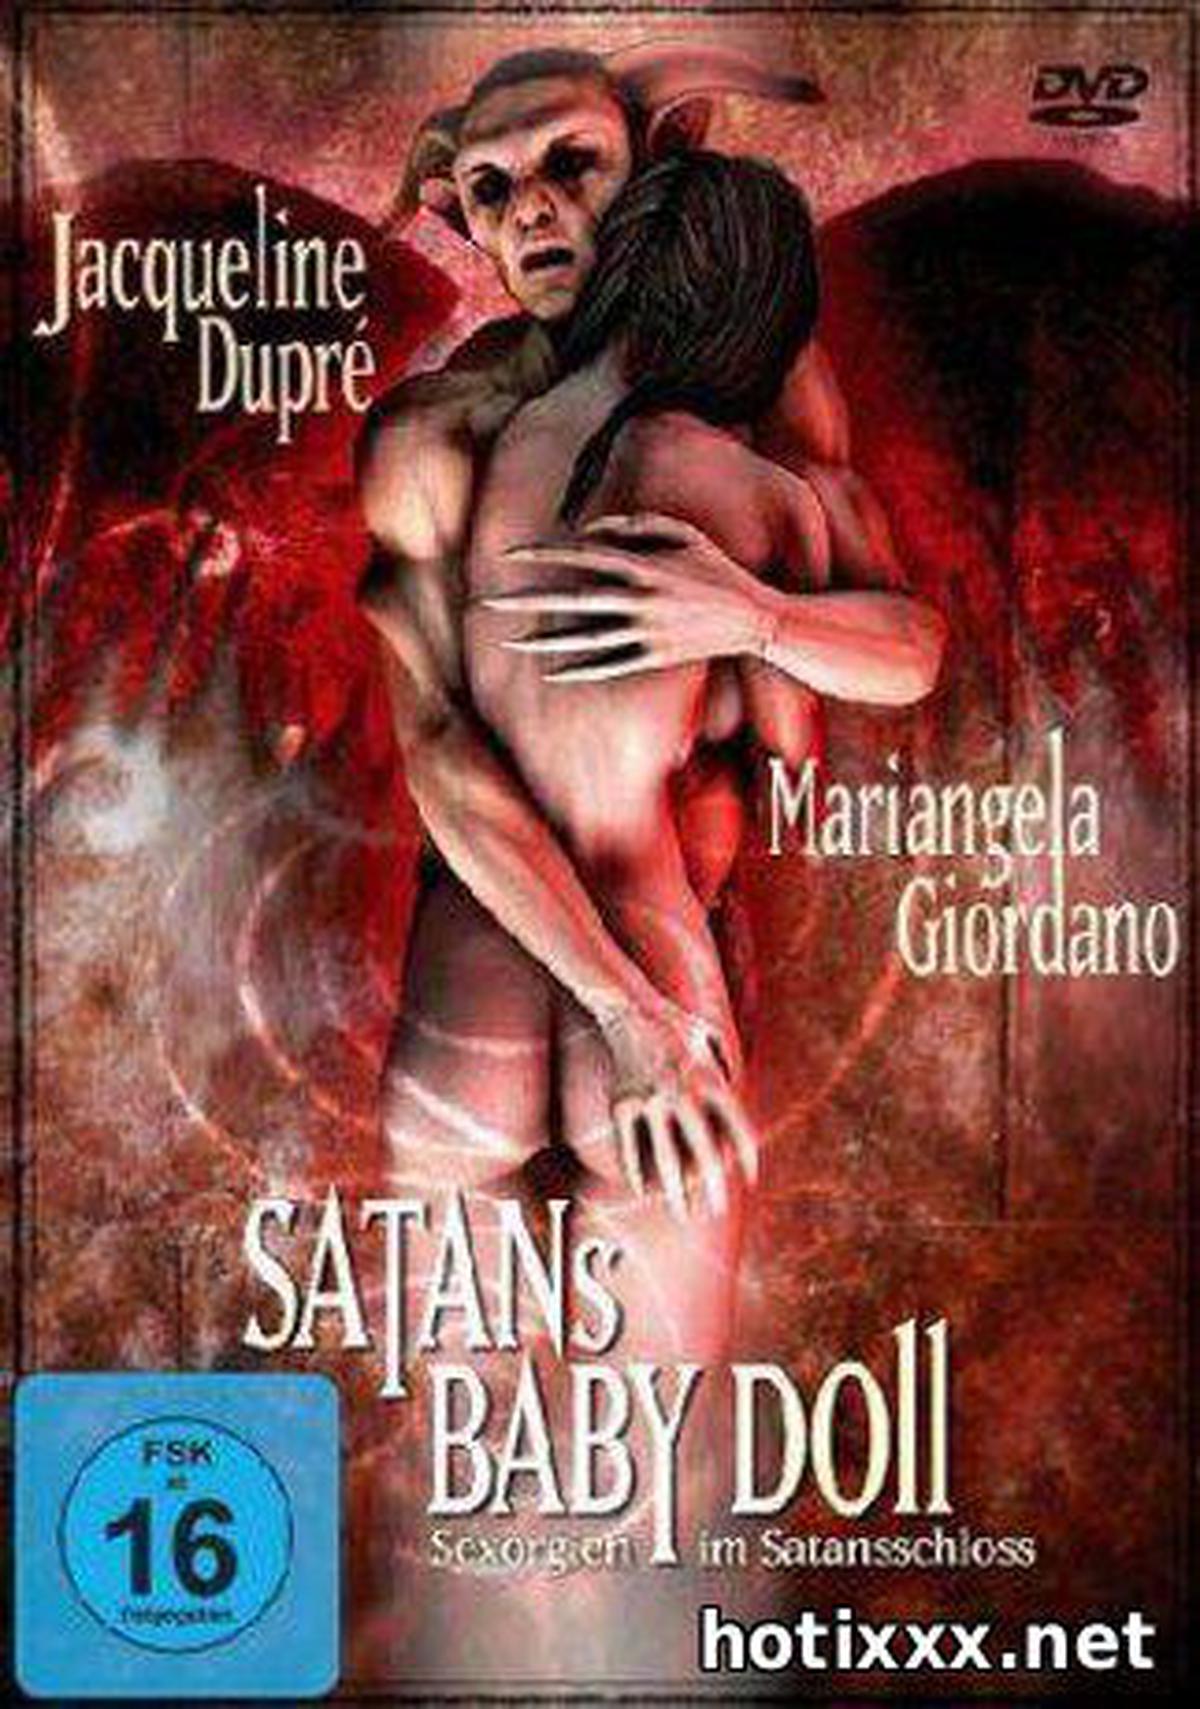 ला बिम्बा दी सतना / शैतान की बेबी डॉल / शैतान के लिए एक लड़की / डॉ पोर्नो अंड सेन सैटेन्सज़ोम्बी / люха атаны (1982) [एक्स-रेटेड लंबा संस्करण]